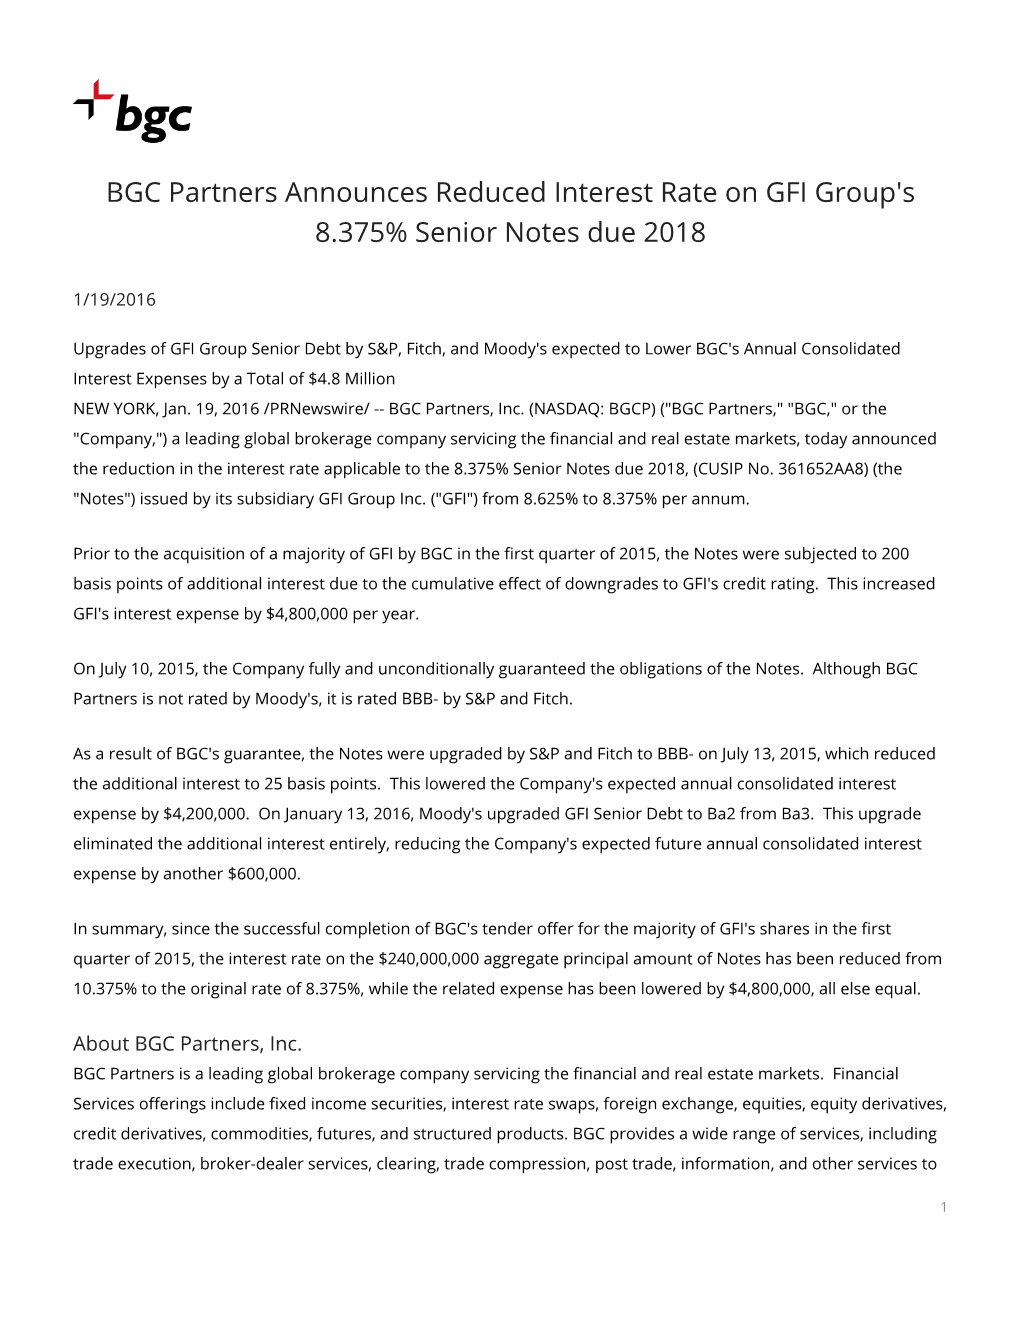 BGC Partners Announces Reduced Interest Rate on GFI Group's 8.375% Senior Notes Due 2018